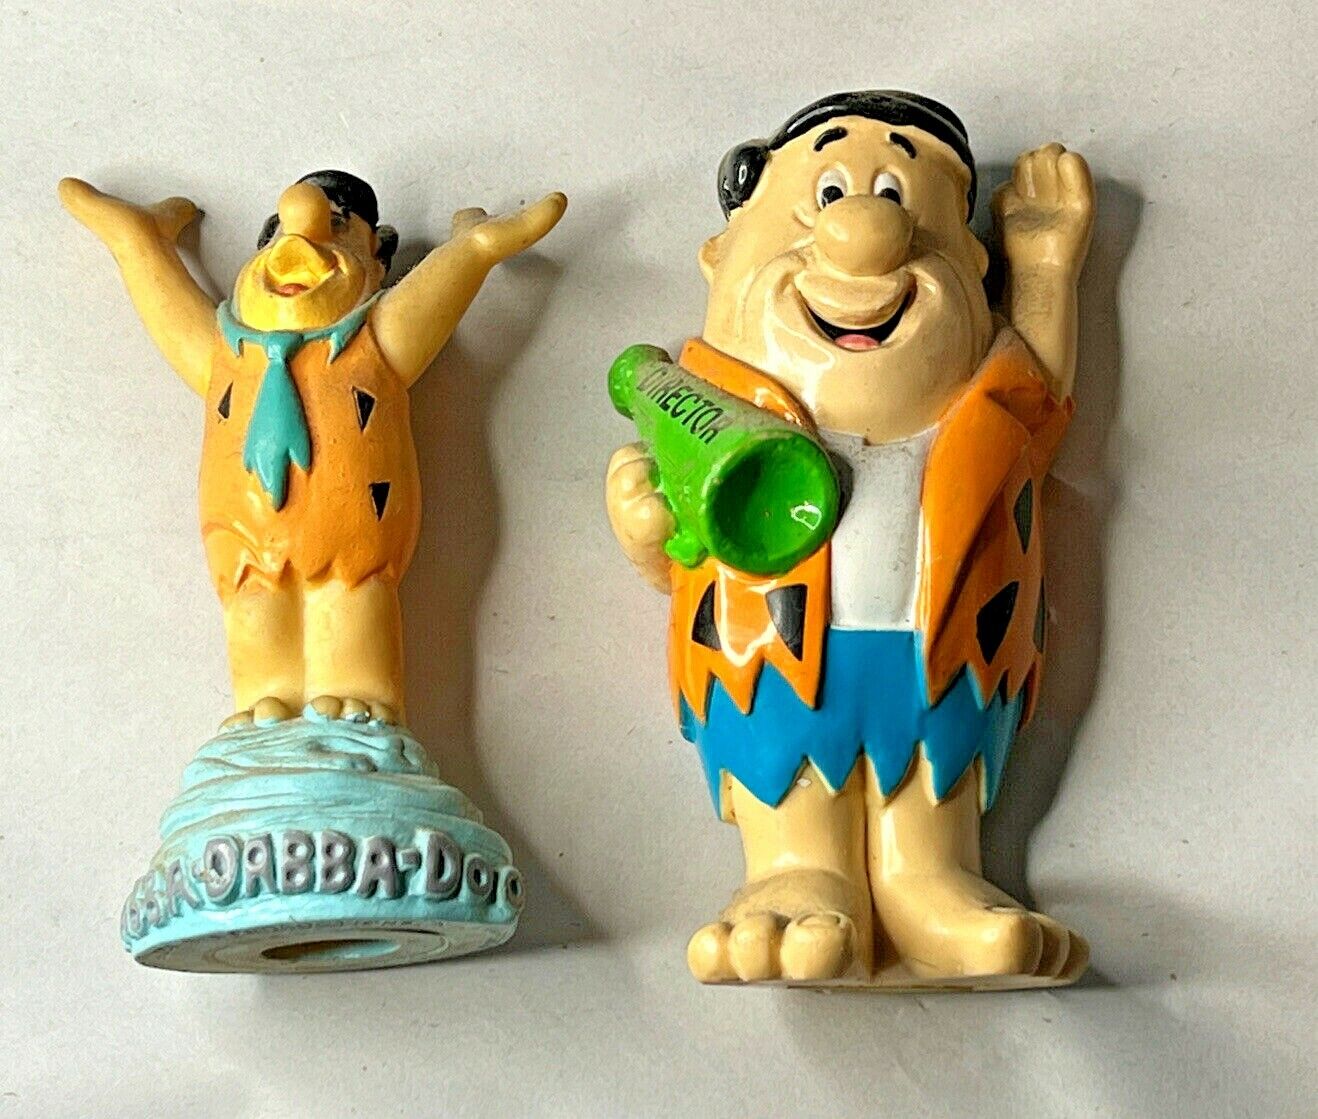 2 Vintage Fred Flintstone Figures, dated 1992 and 1993